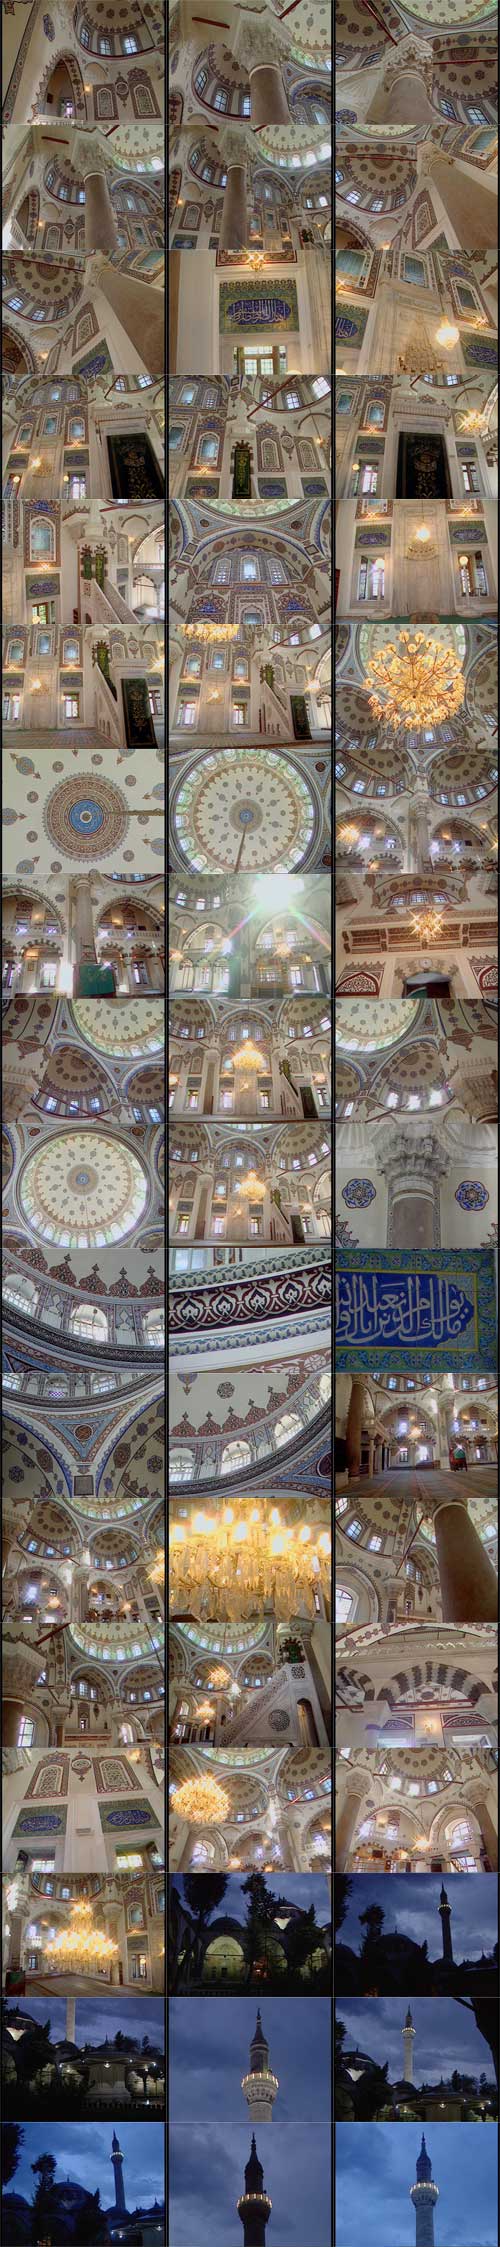 Ottoman & Turkey Mosques 9 - Gazi Ahmet Pasha Mosque